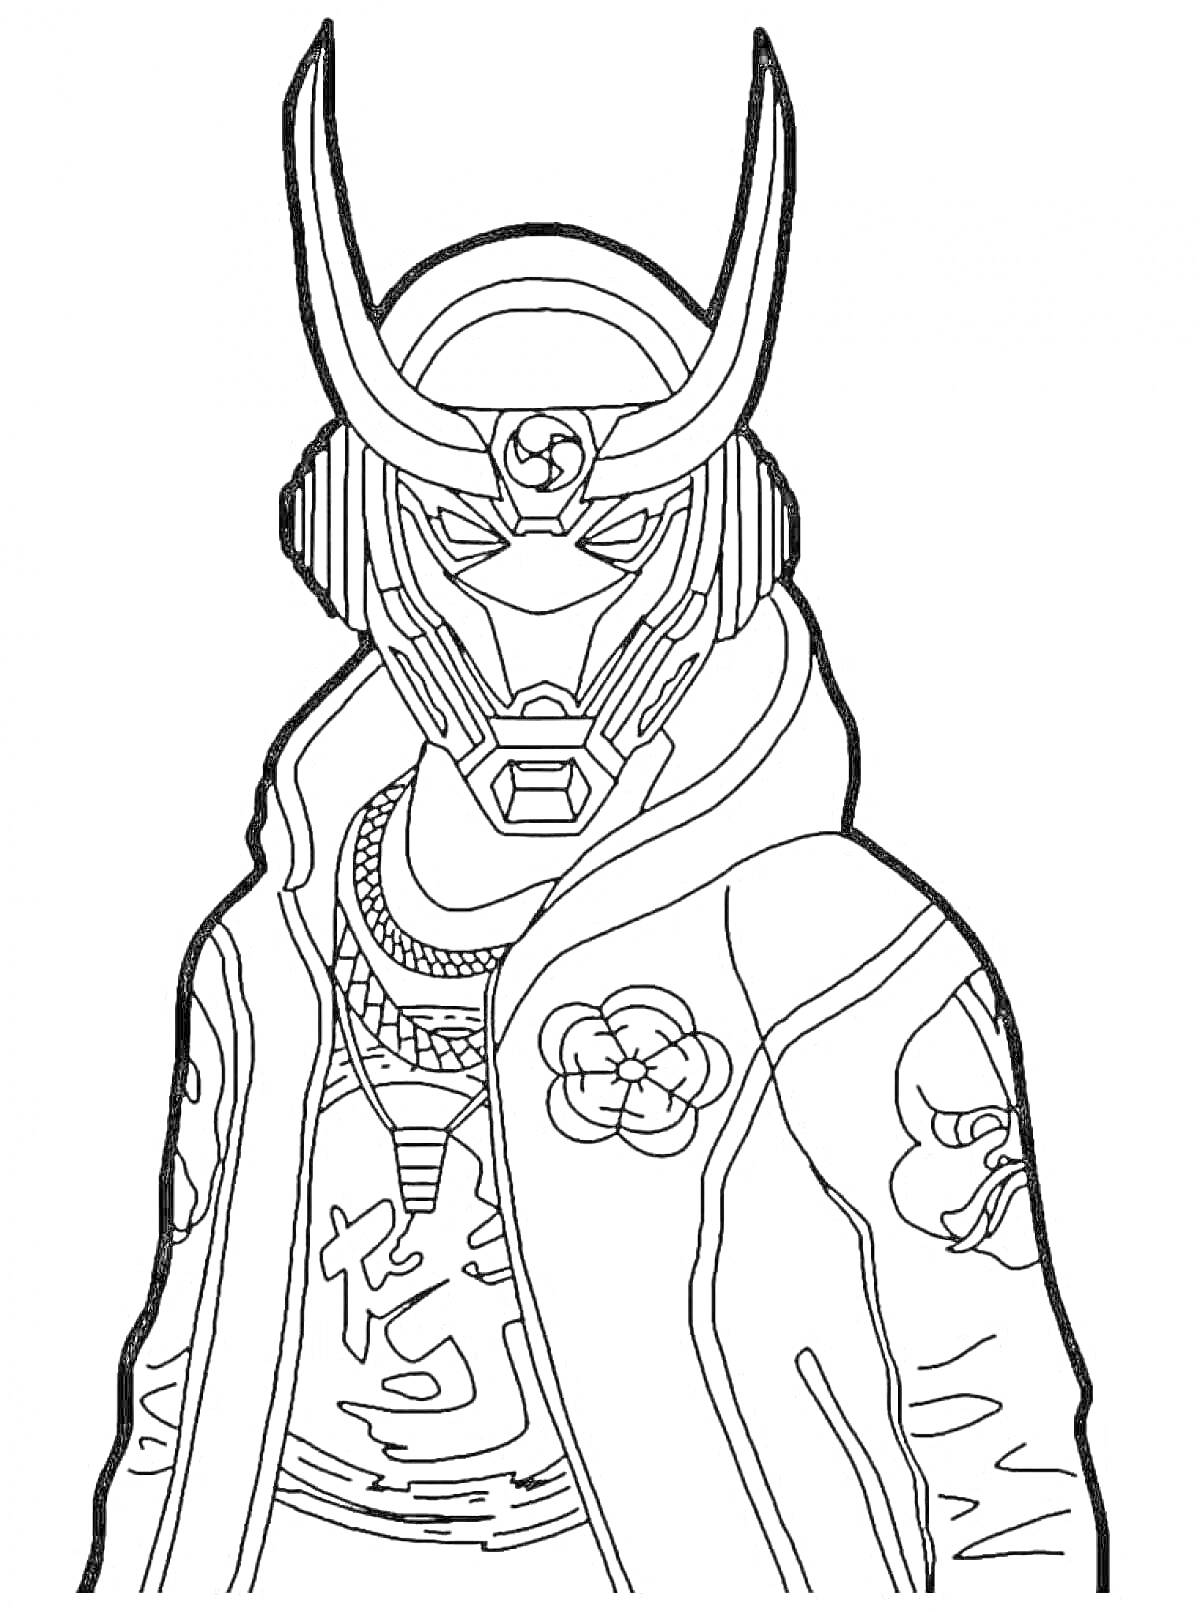 Раскраска Человек в маске с рогами, киберпанк костюме и куртке с узорами